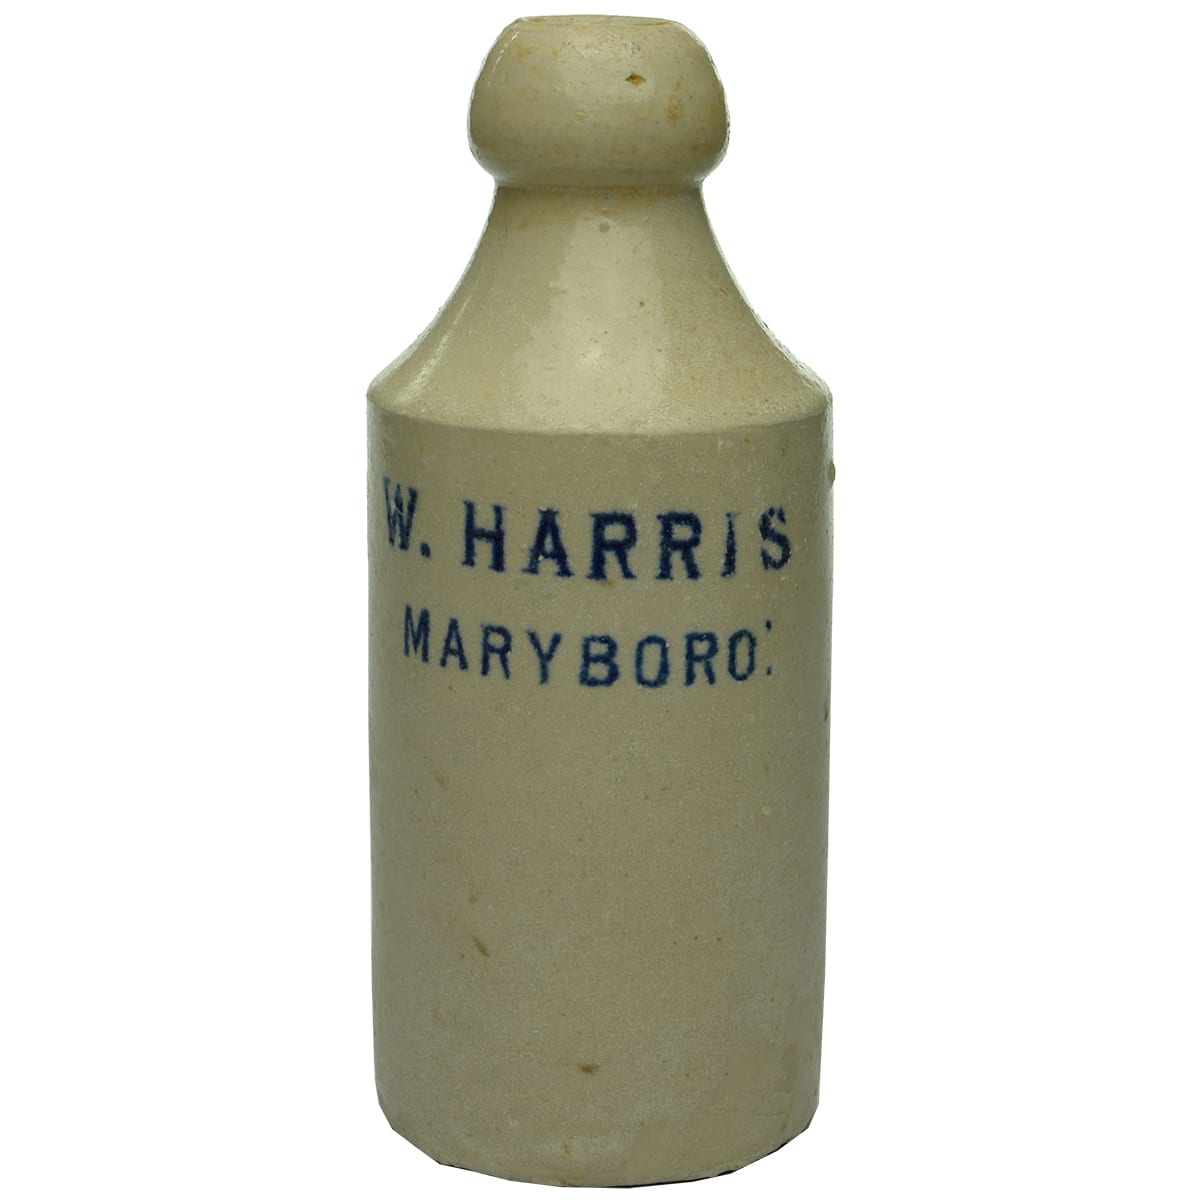 Ginger Beer. W. Harris, Maryboro'. Glasgow pottery. Blue Print. (Maryborough, Queensland)